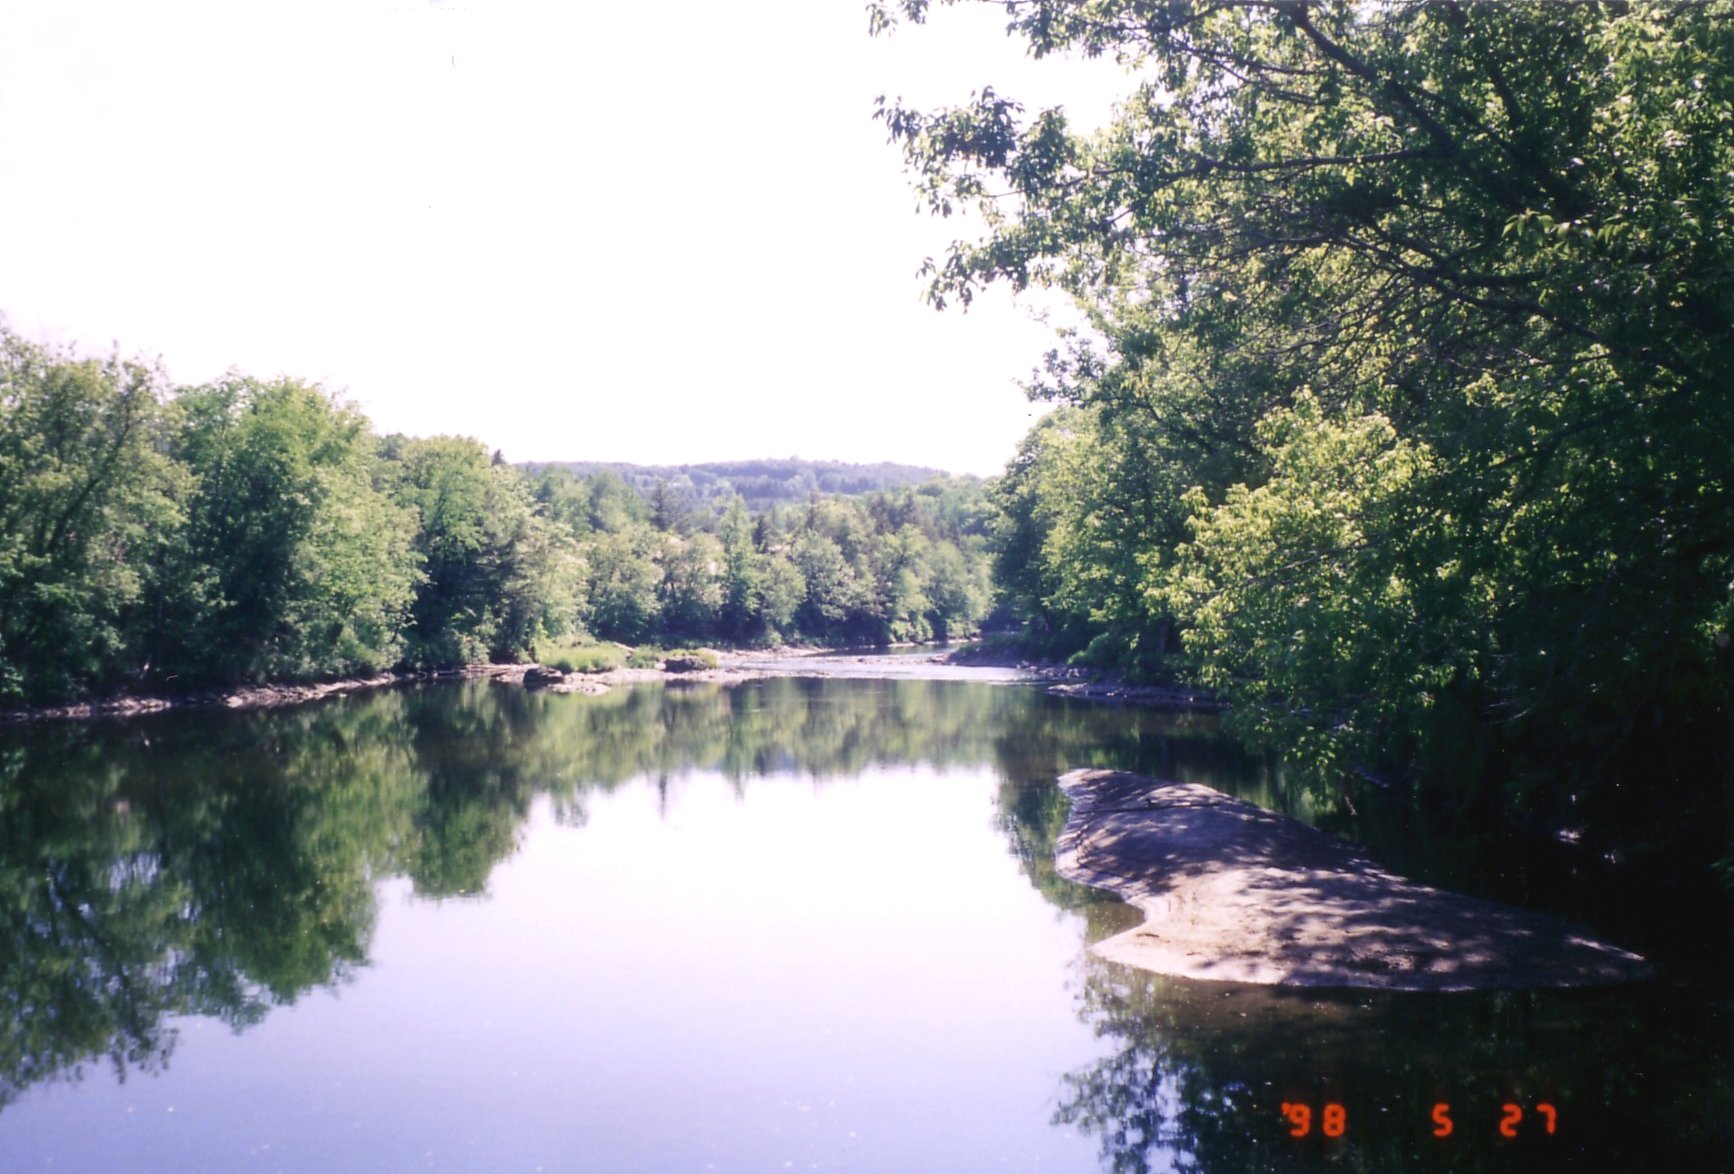 Photograph of the Passumpsic River at Passumpsic, VT (PASV1) looking upstream